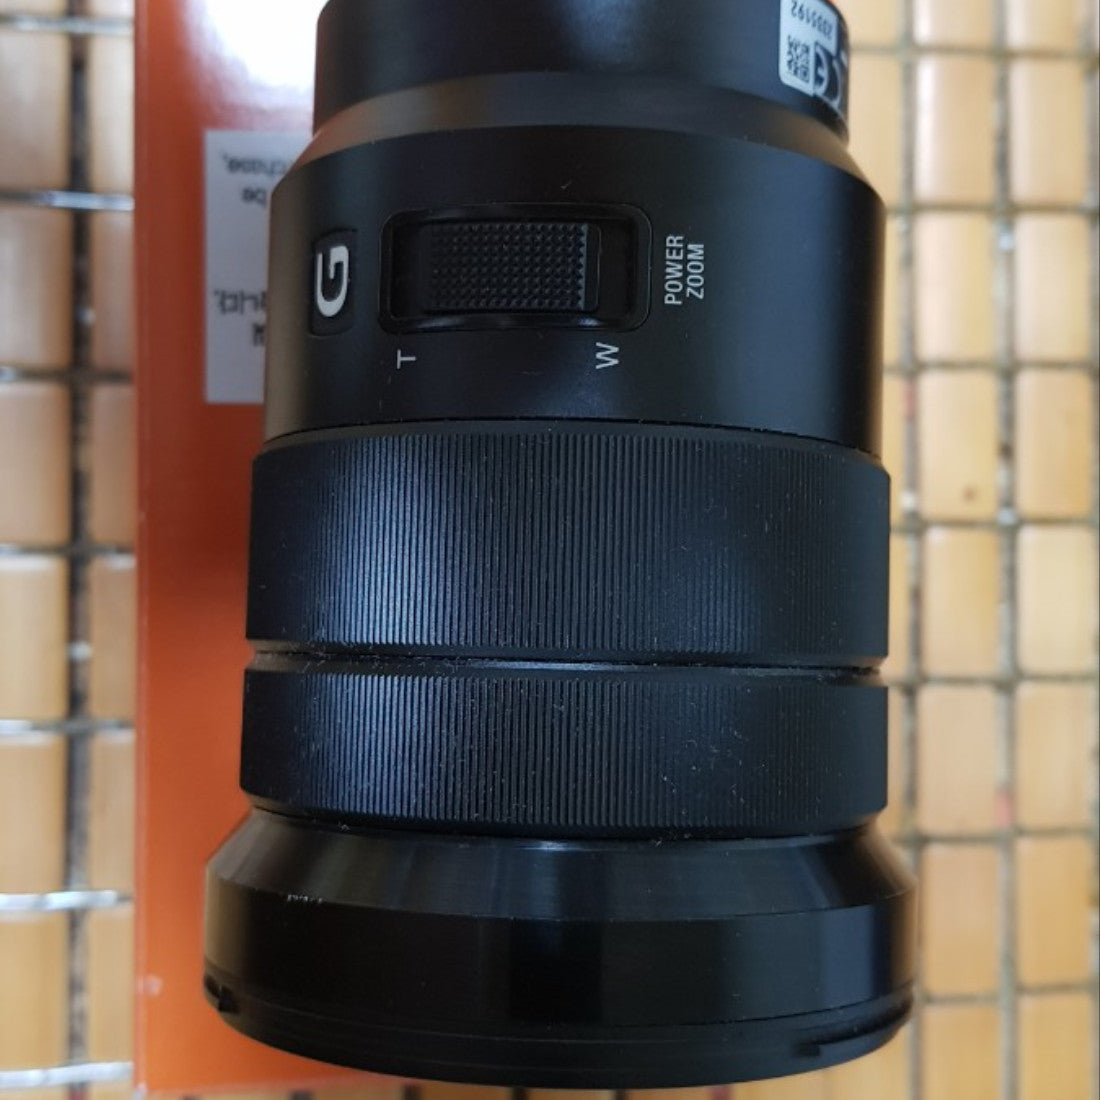 Used Sony G-Series E PZ 18-105mm F4 G OSS Lens for Sony